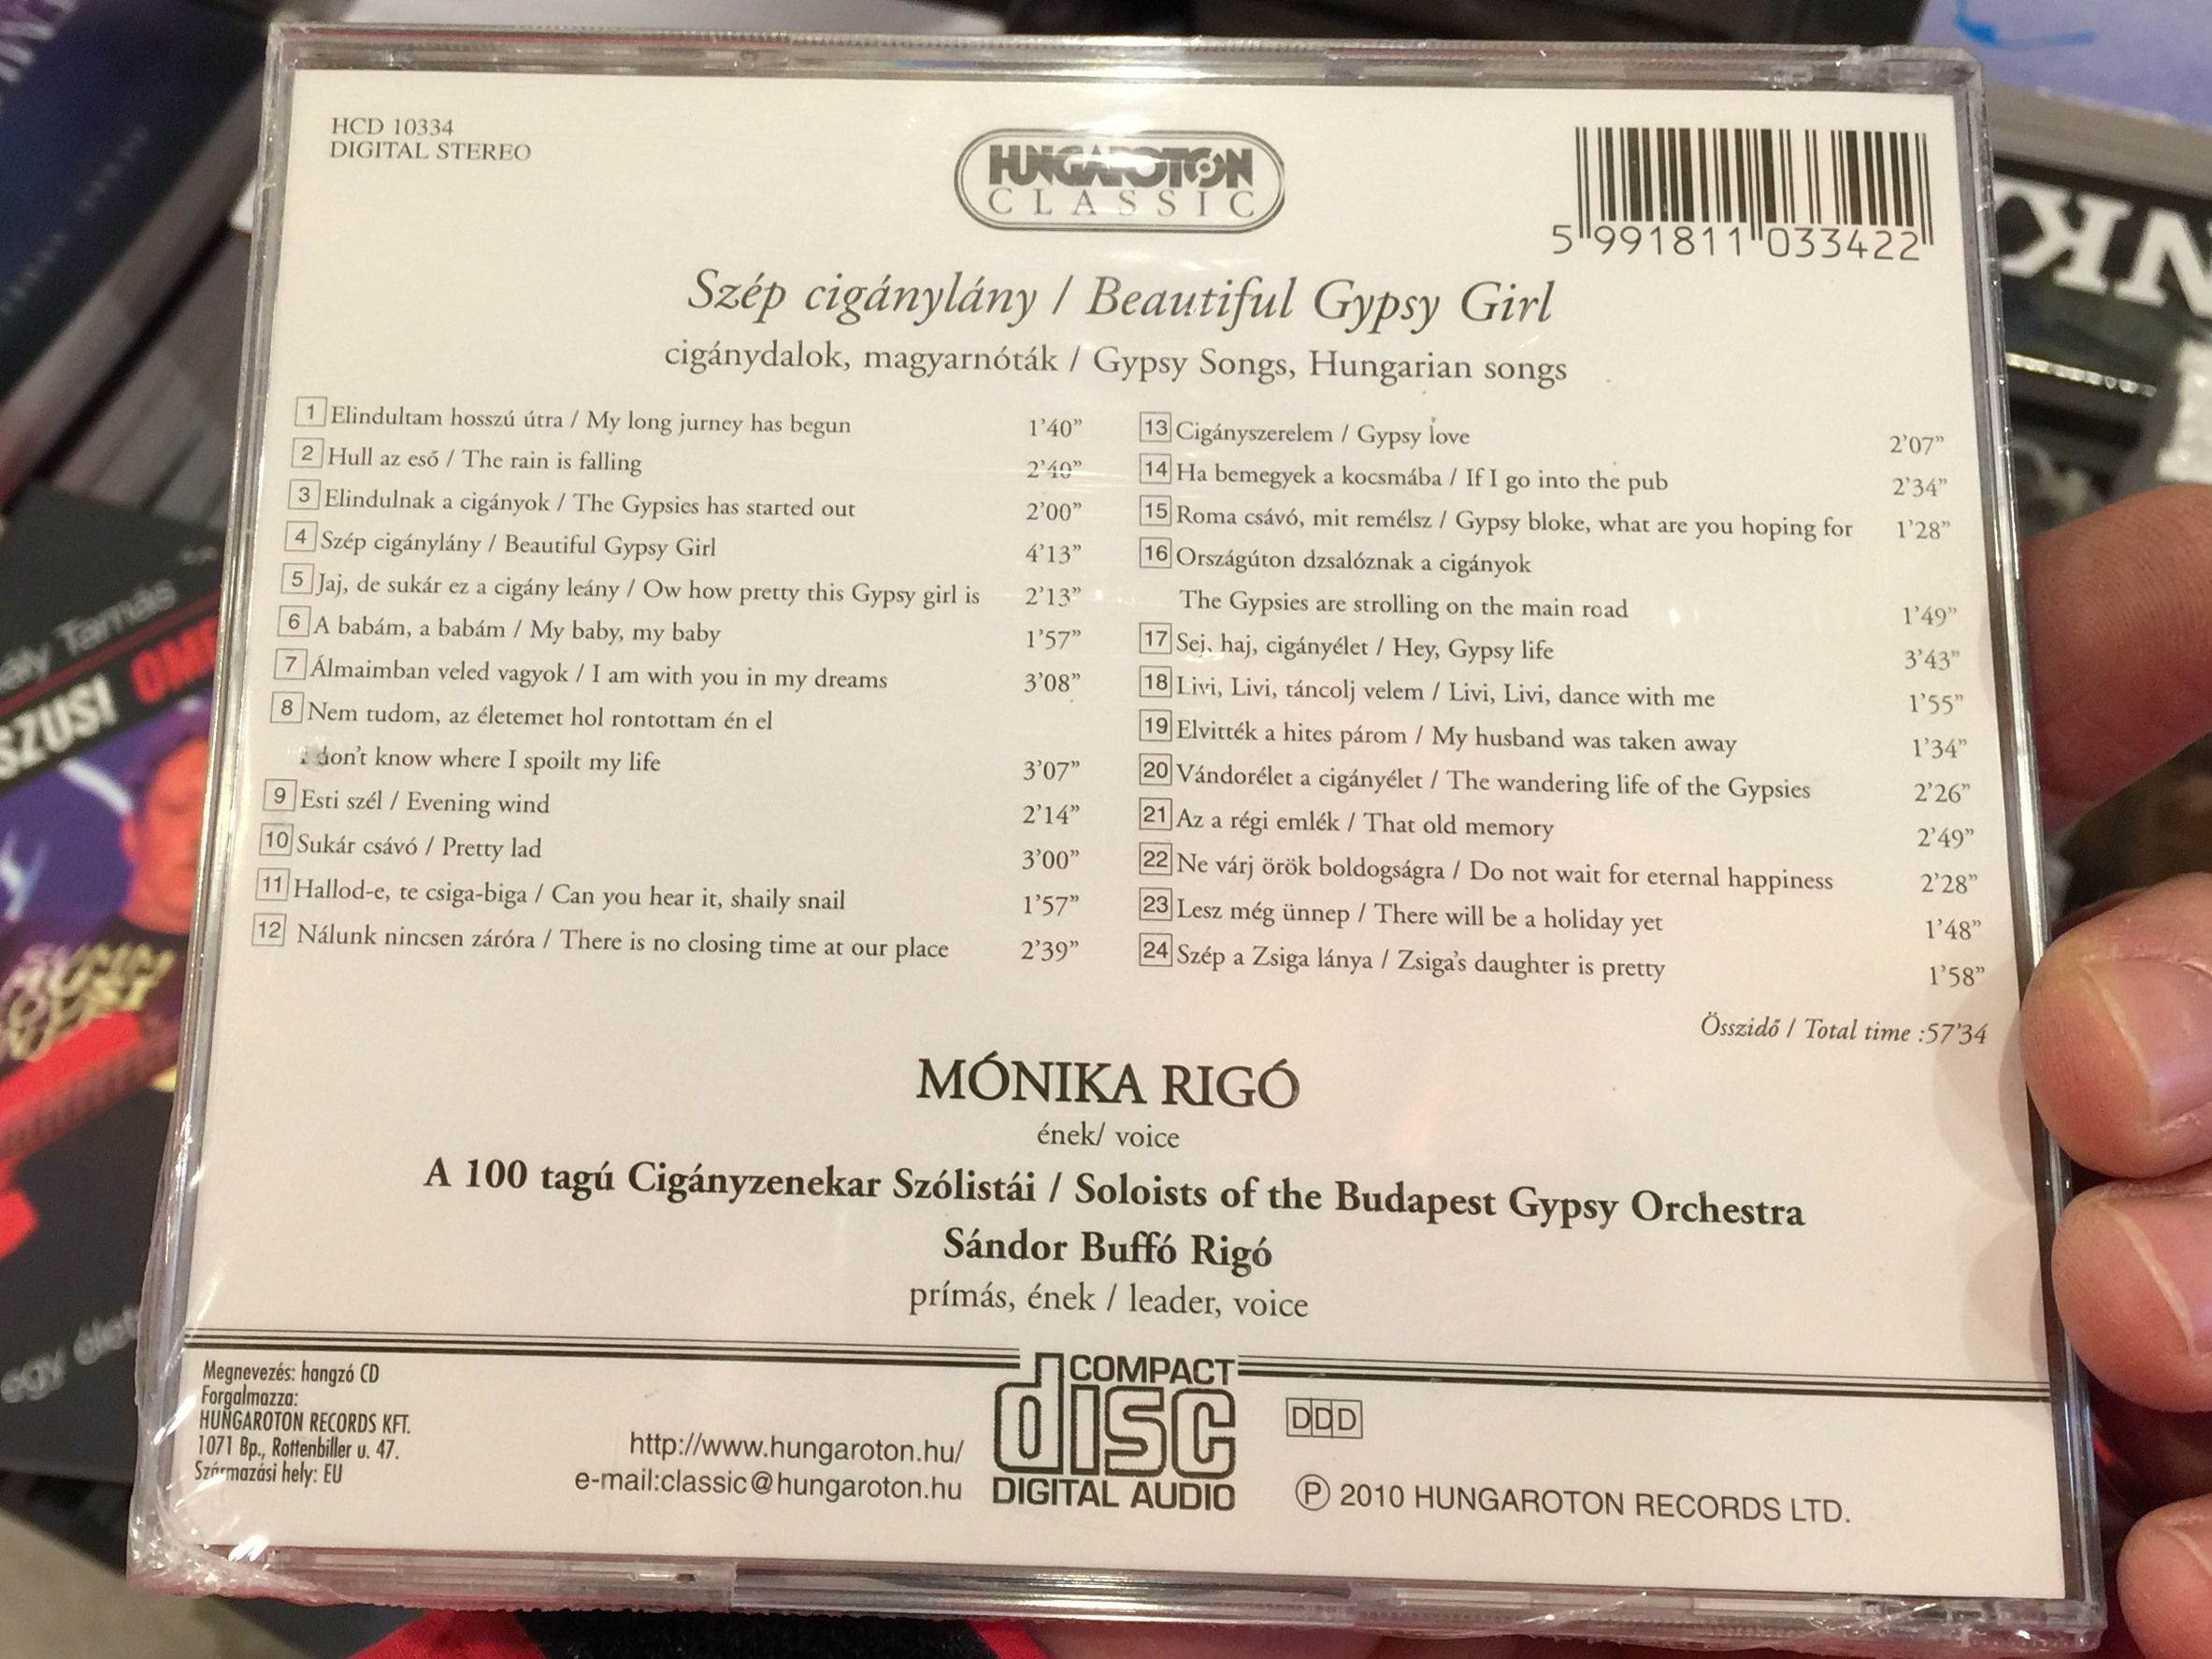 szep-ciganylany-rigo-monika-enekel-a-100-tagu-ciganyzenekar-szolistai-buffo-rigo-sandor-primas-gypsy-songs-hungarian-songs-hugaroton-classic-audio-cd-2010-stereo-hcd-10334-2-.jpg